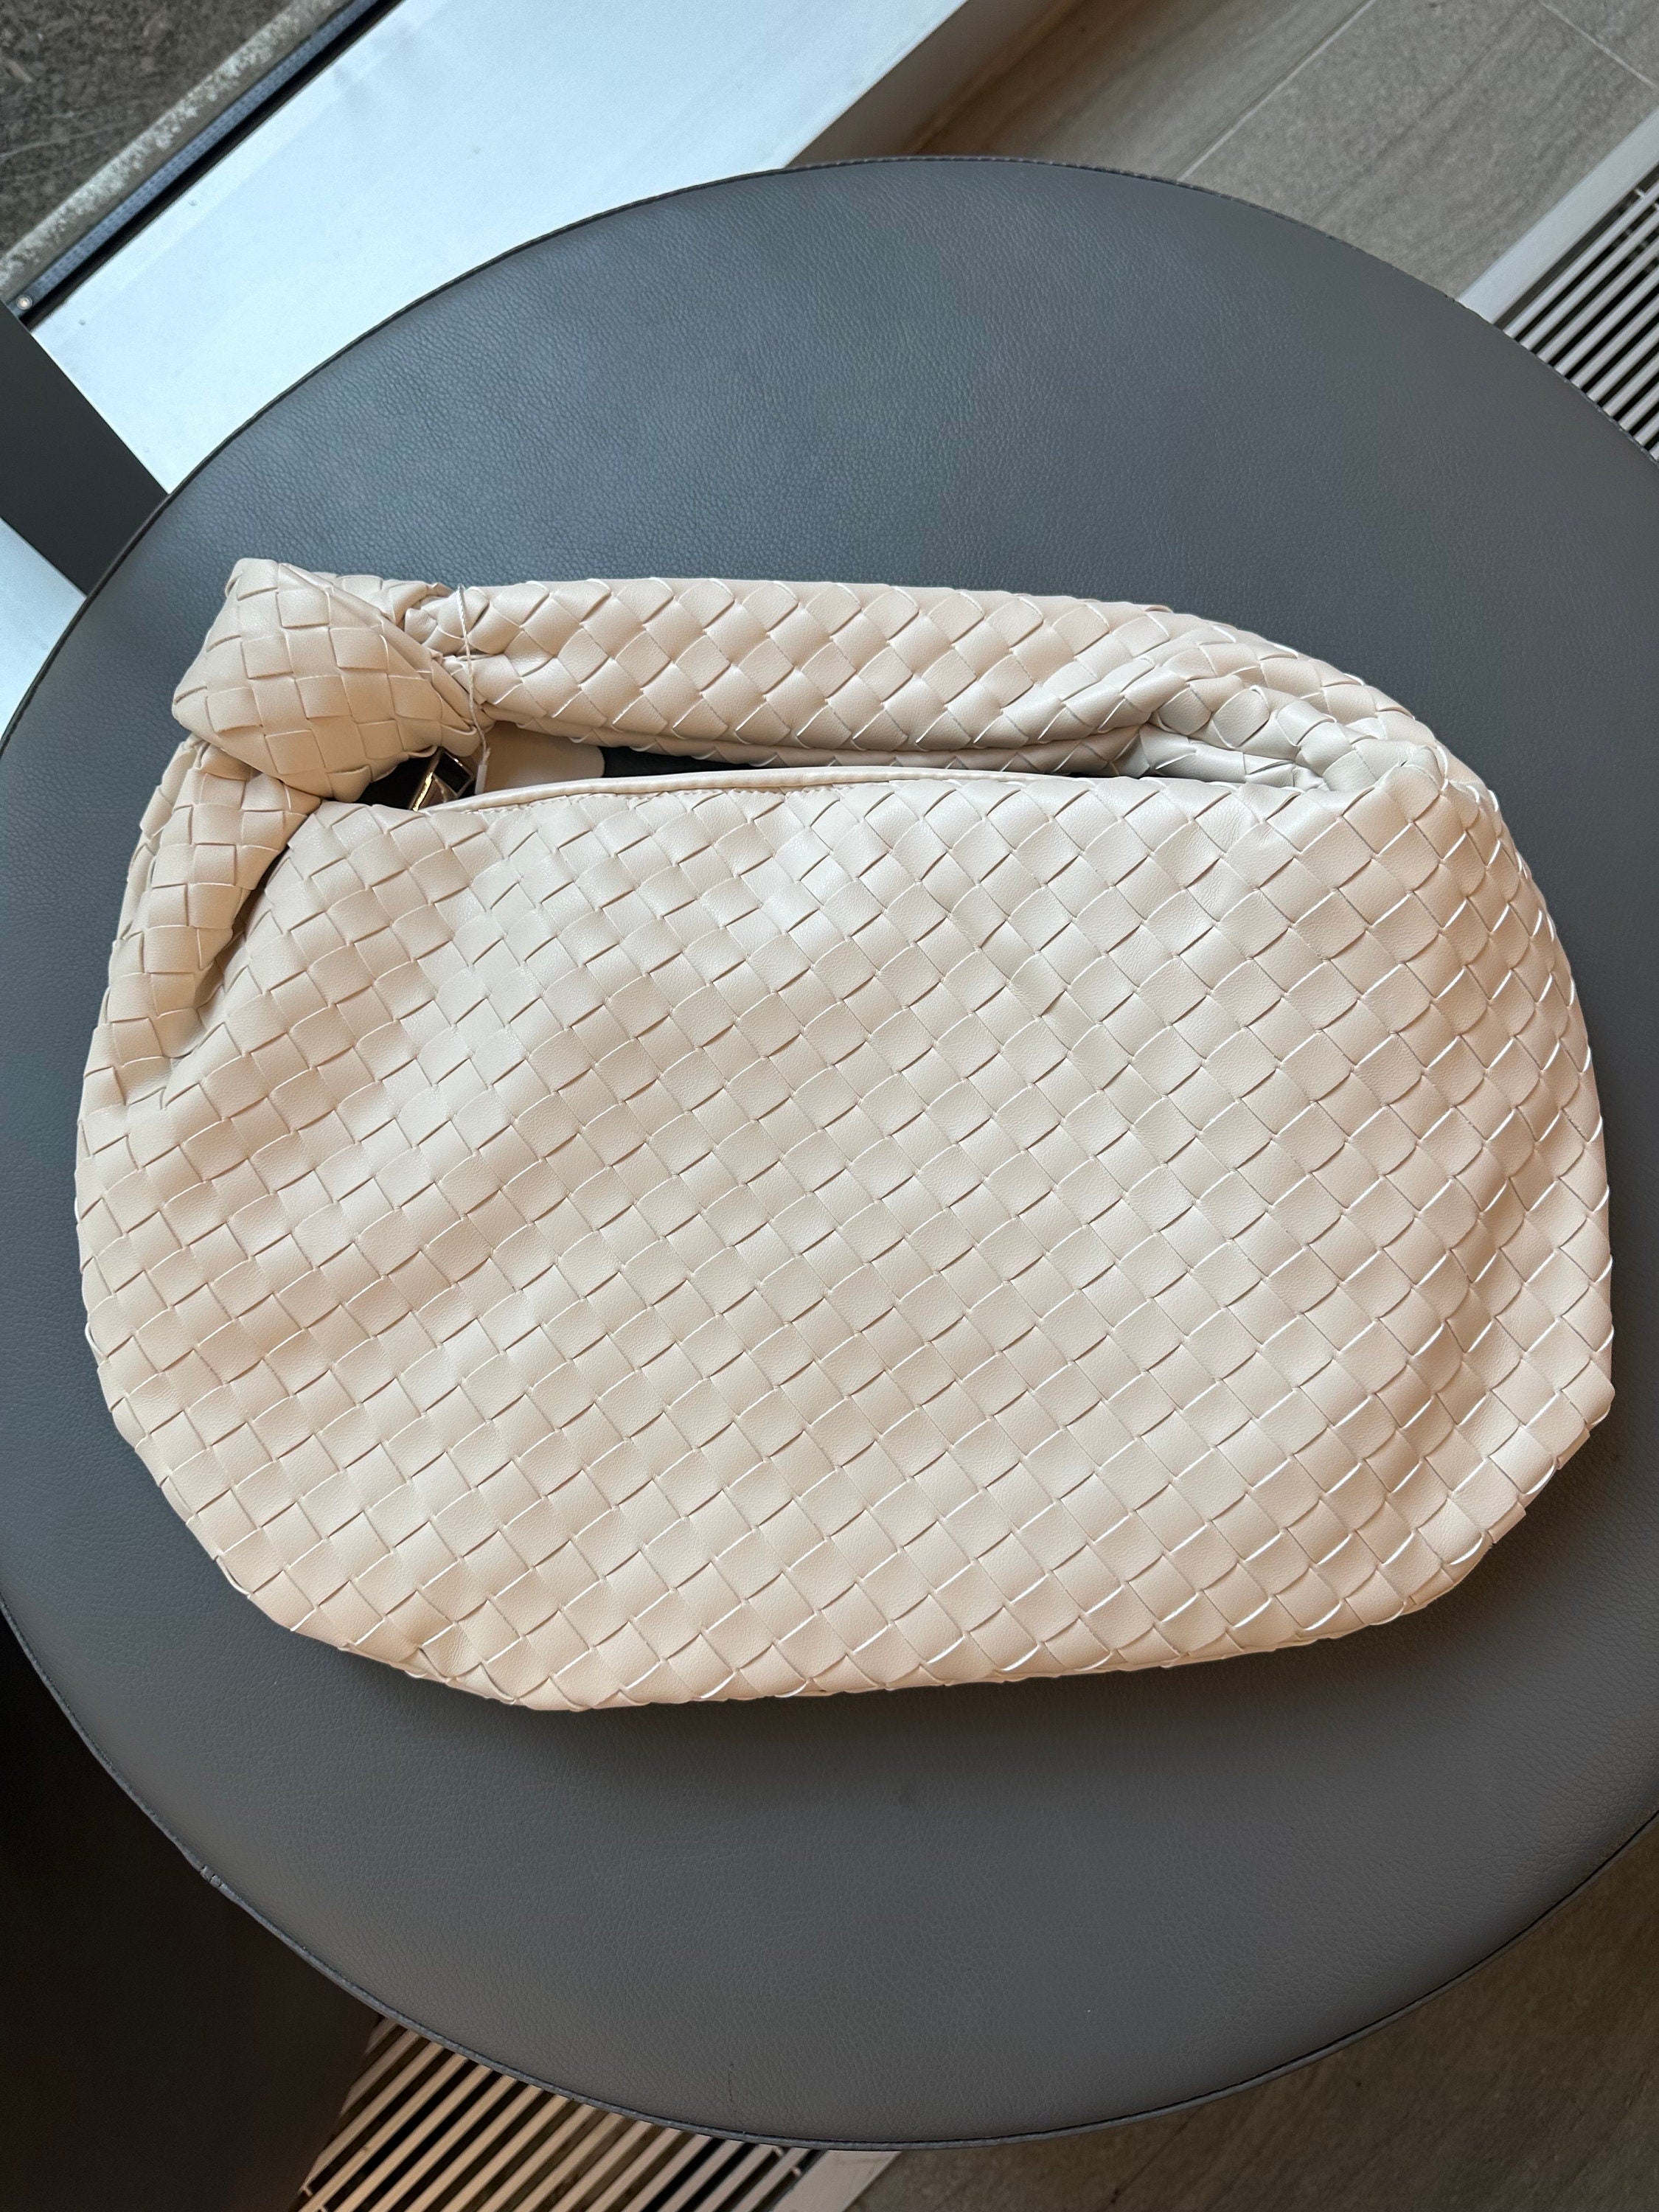 Woven Tote Leather Bag- Luxury Handbag Gift- Faux Leather Hobo Bag- Leather Clutch- Minimalist Women Handbag- Knot Woven Bag- Retro Handbag